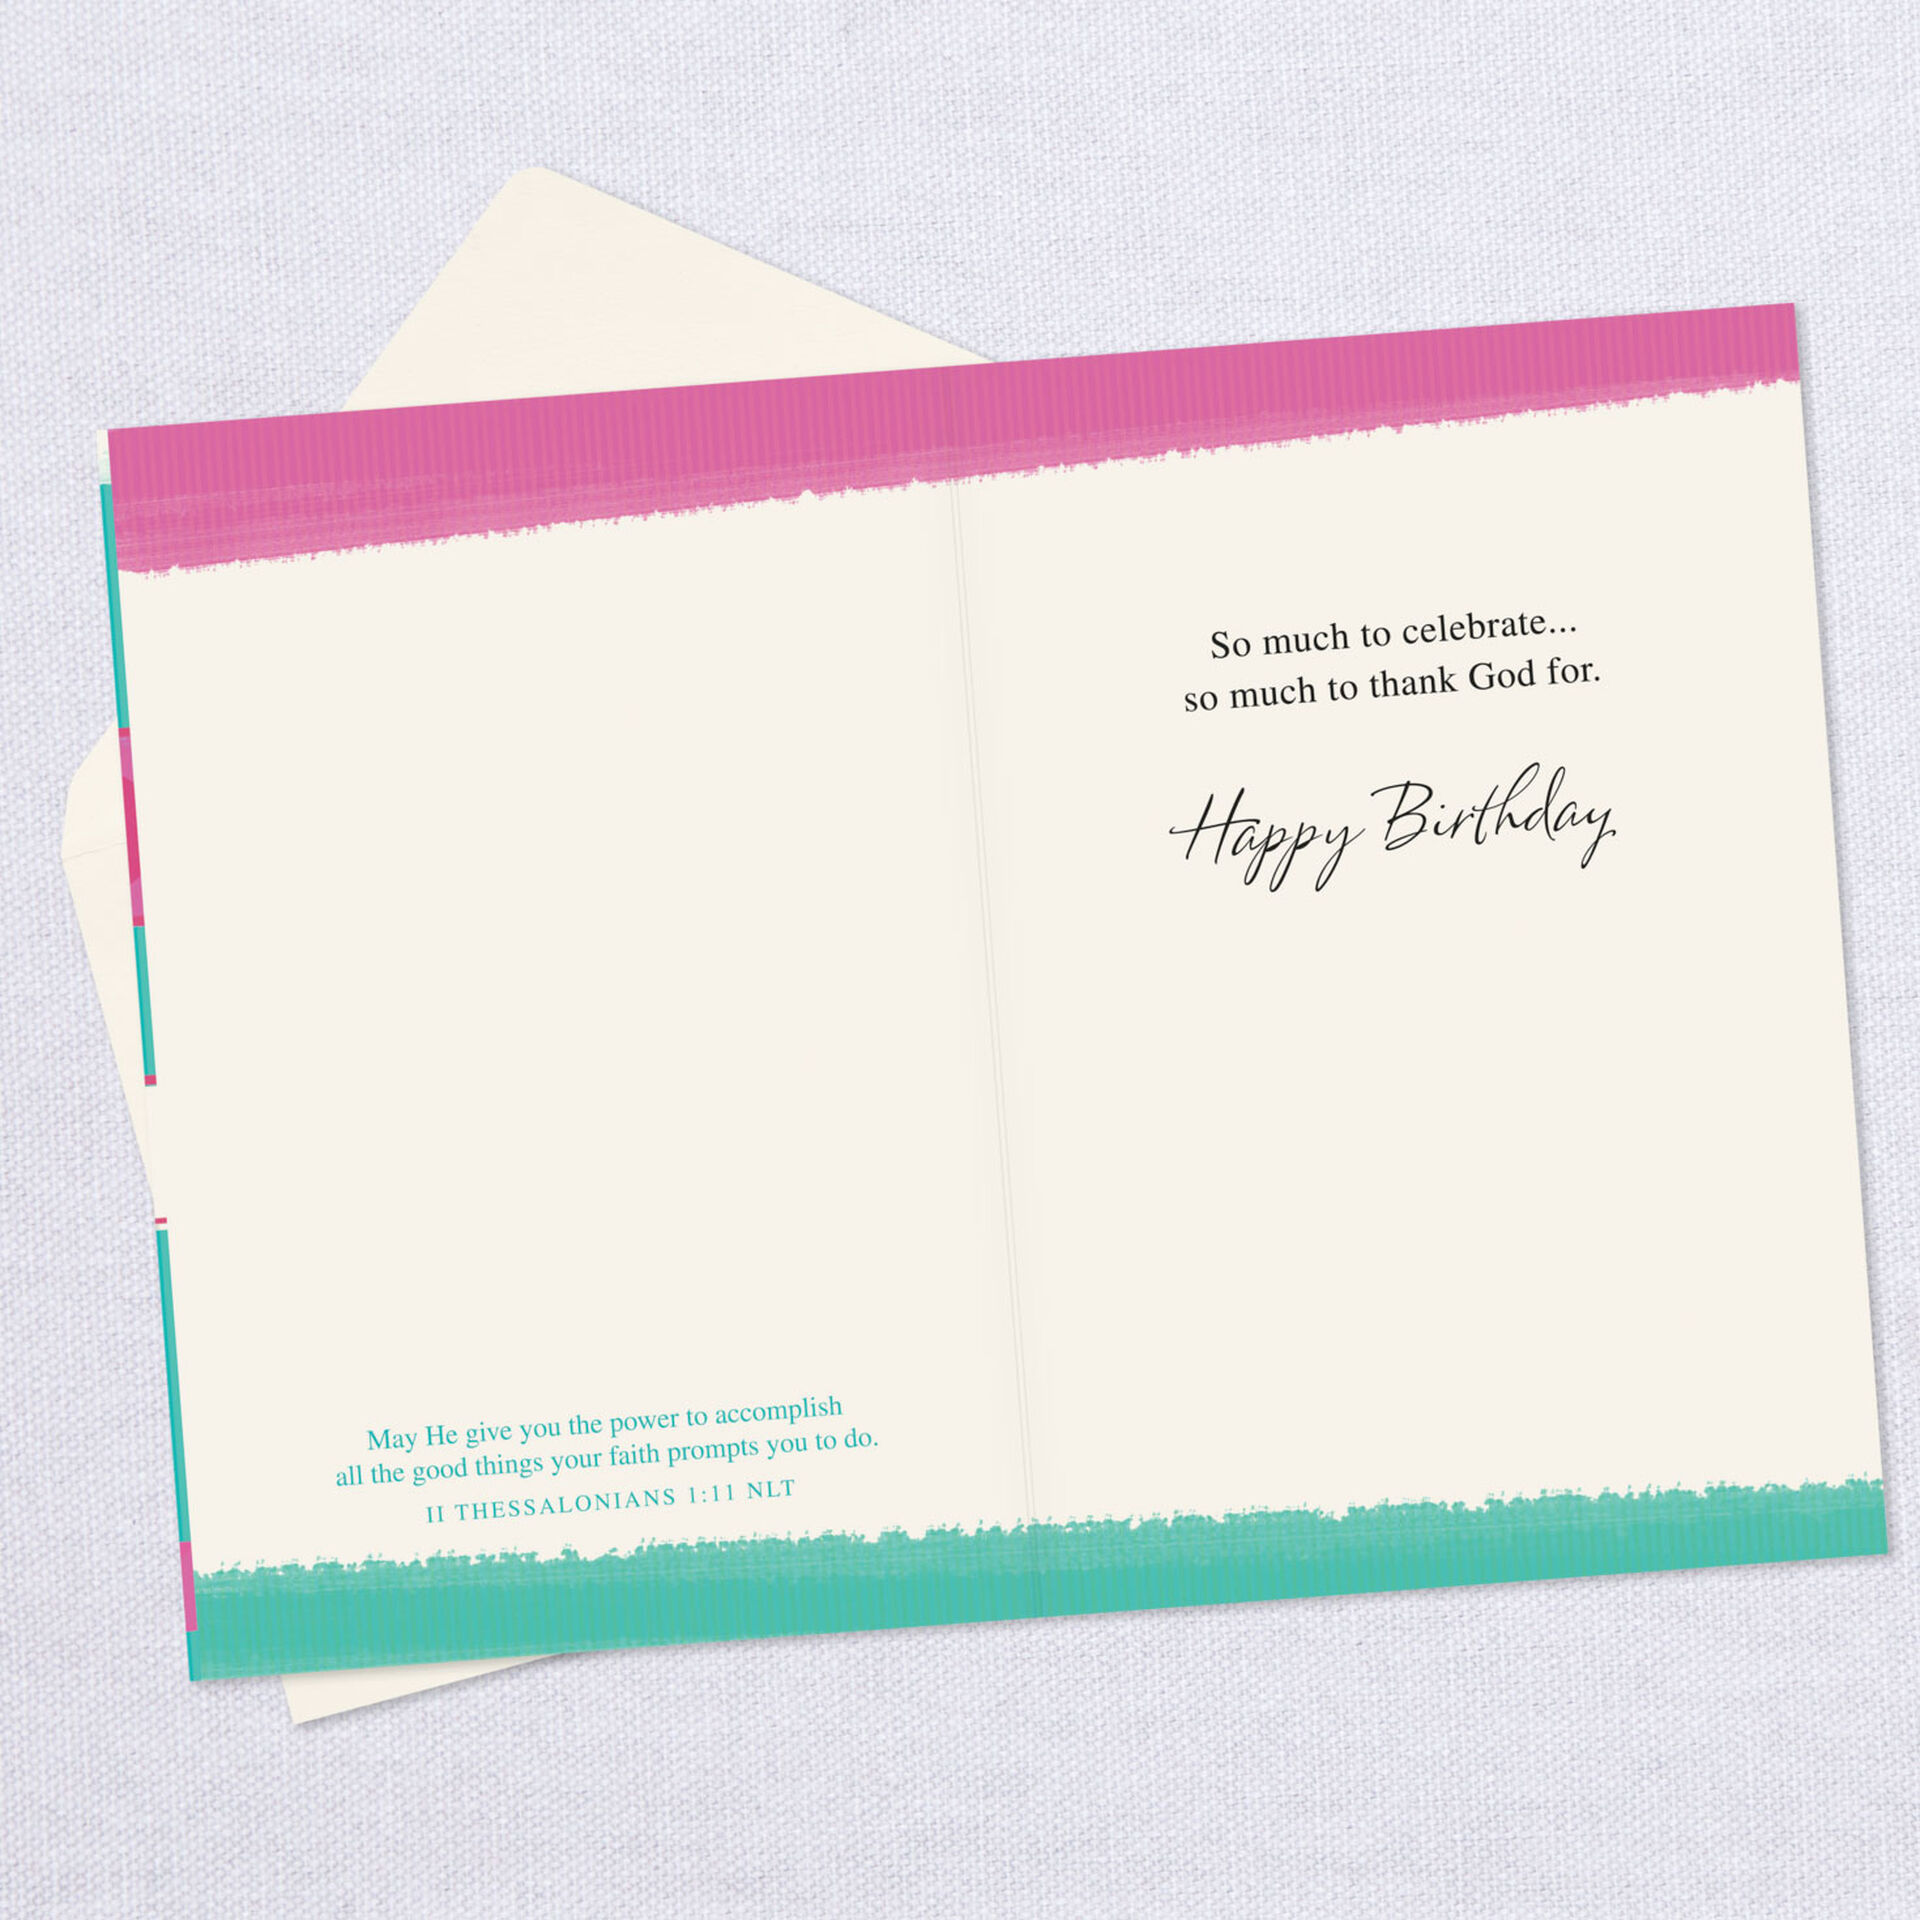 Celebrate-Every-Good-Thing-Religious-Birthday-Card_299DIM1809_03